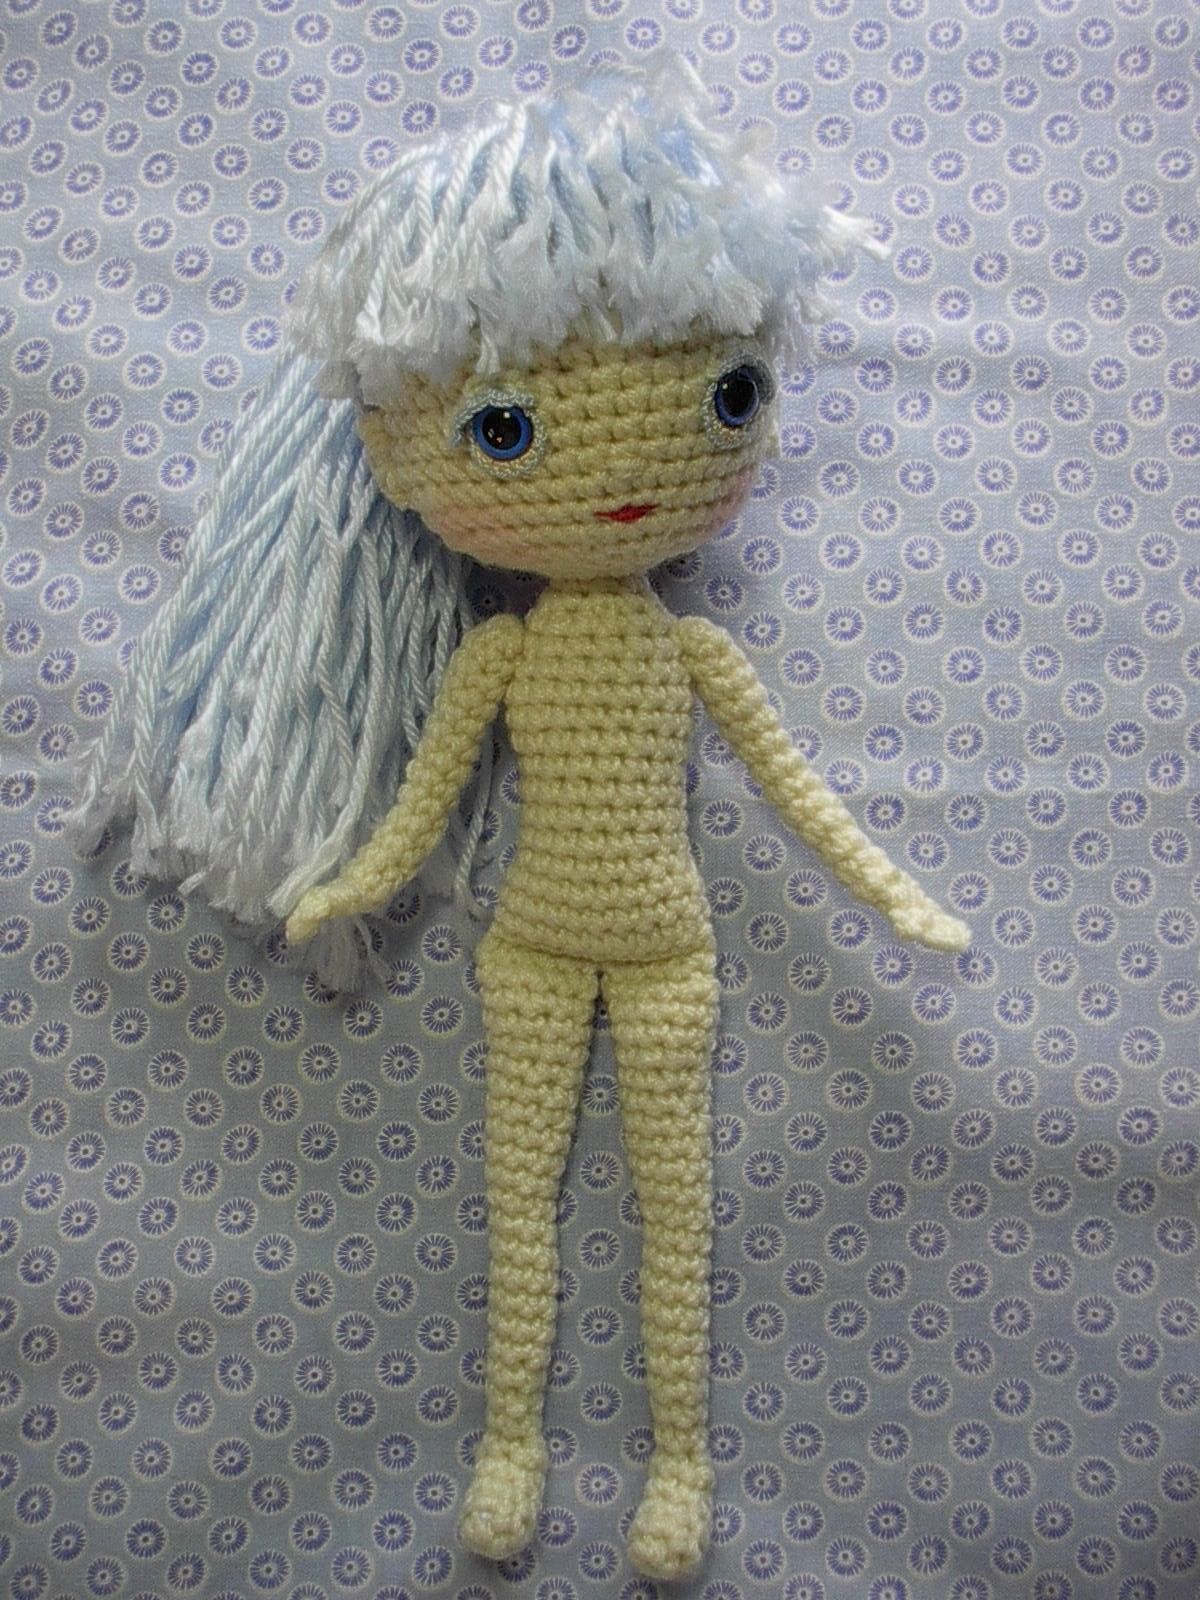 Simple Crochet Doll Pattern 1500 Free Amigurumi Patterns Human Doll Crochet Queen Pinterest